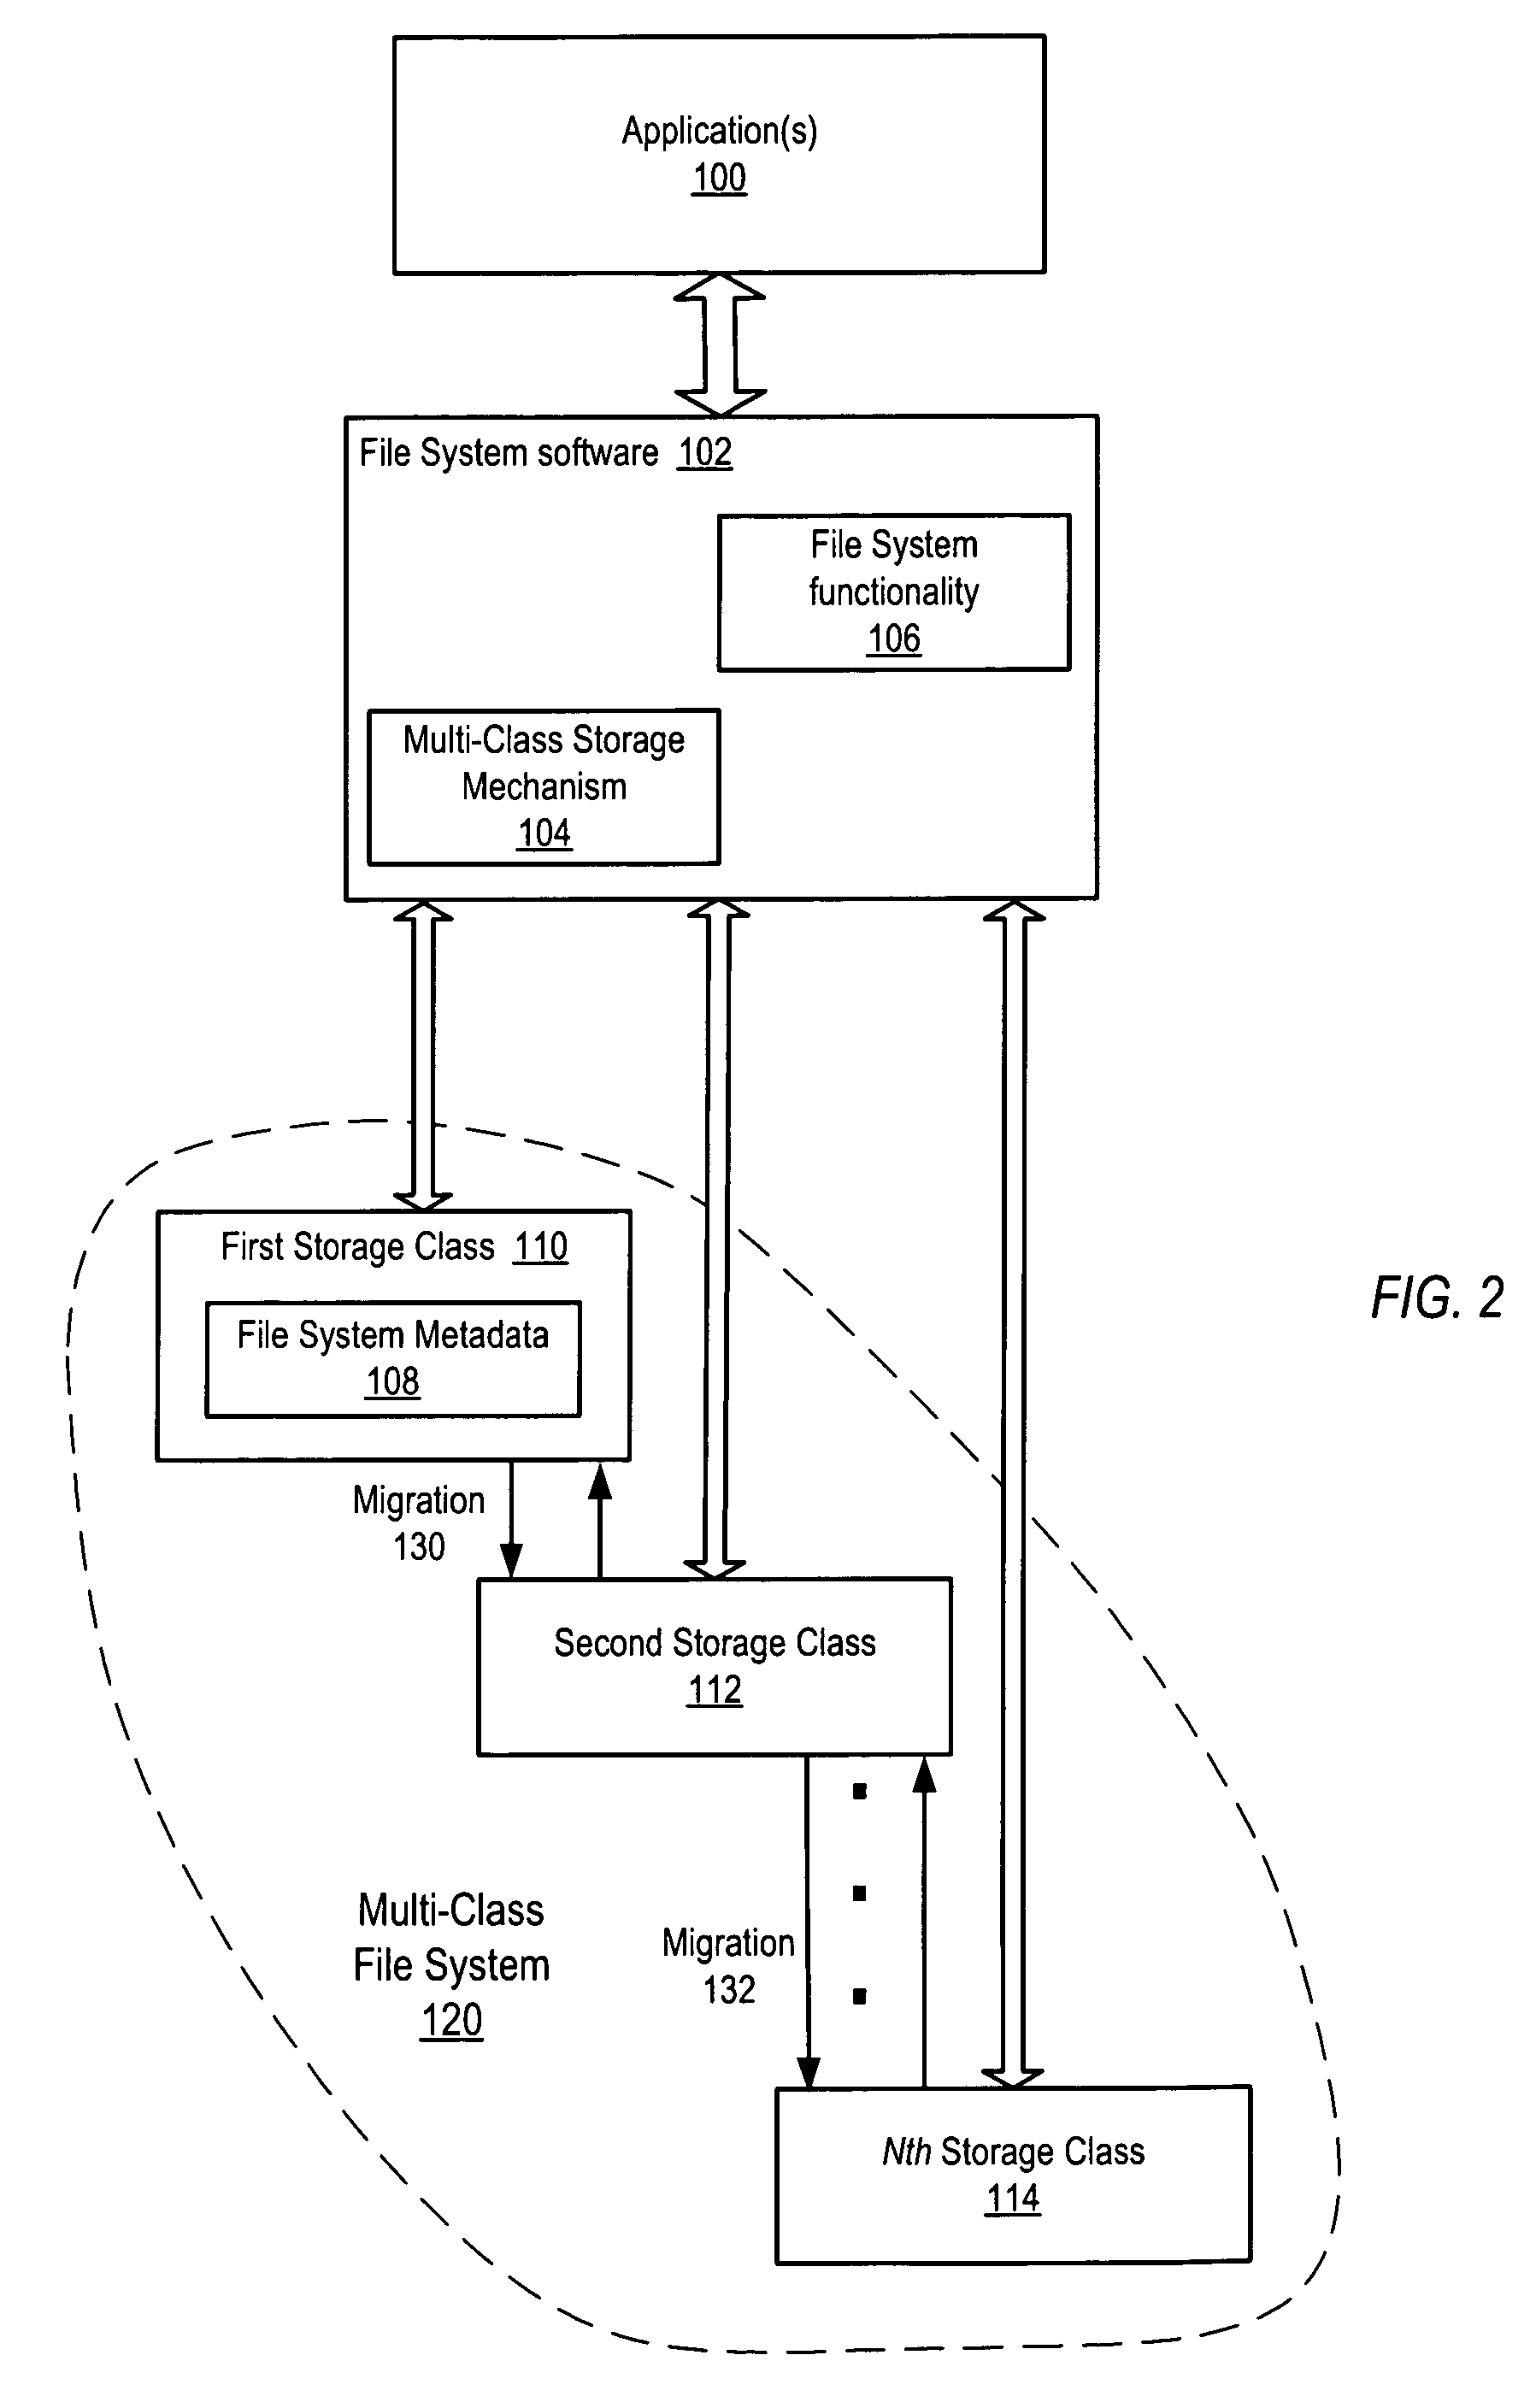 Multi-class storage mechanism